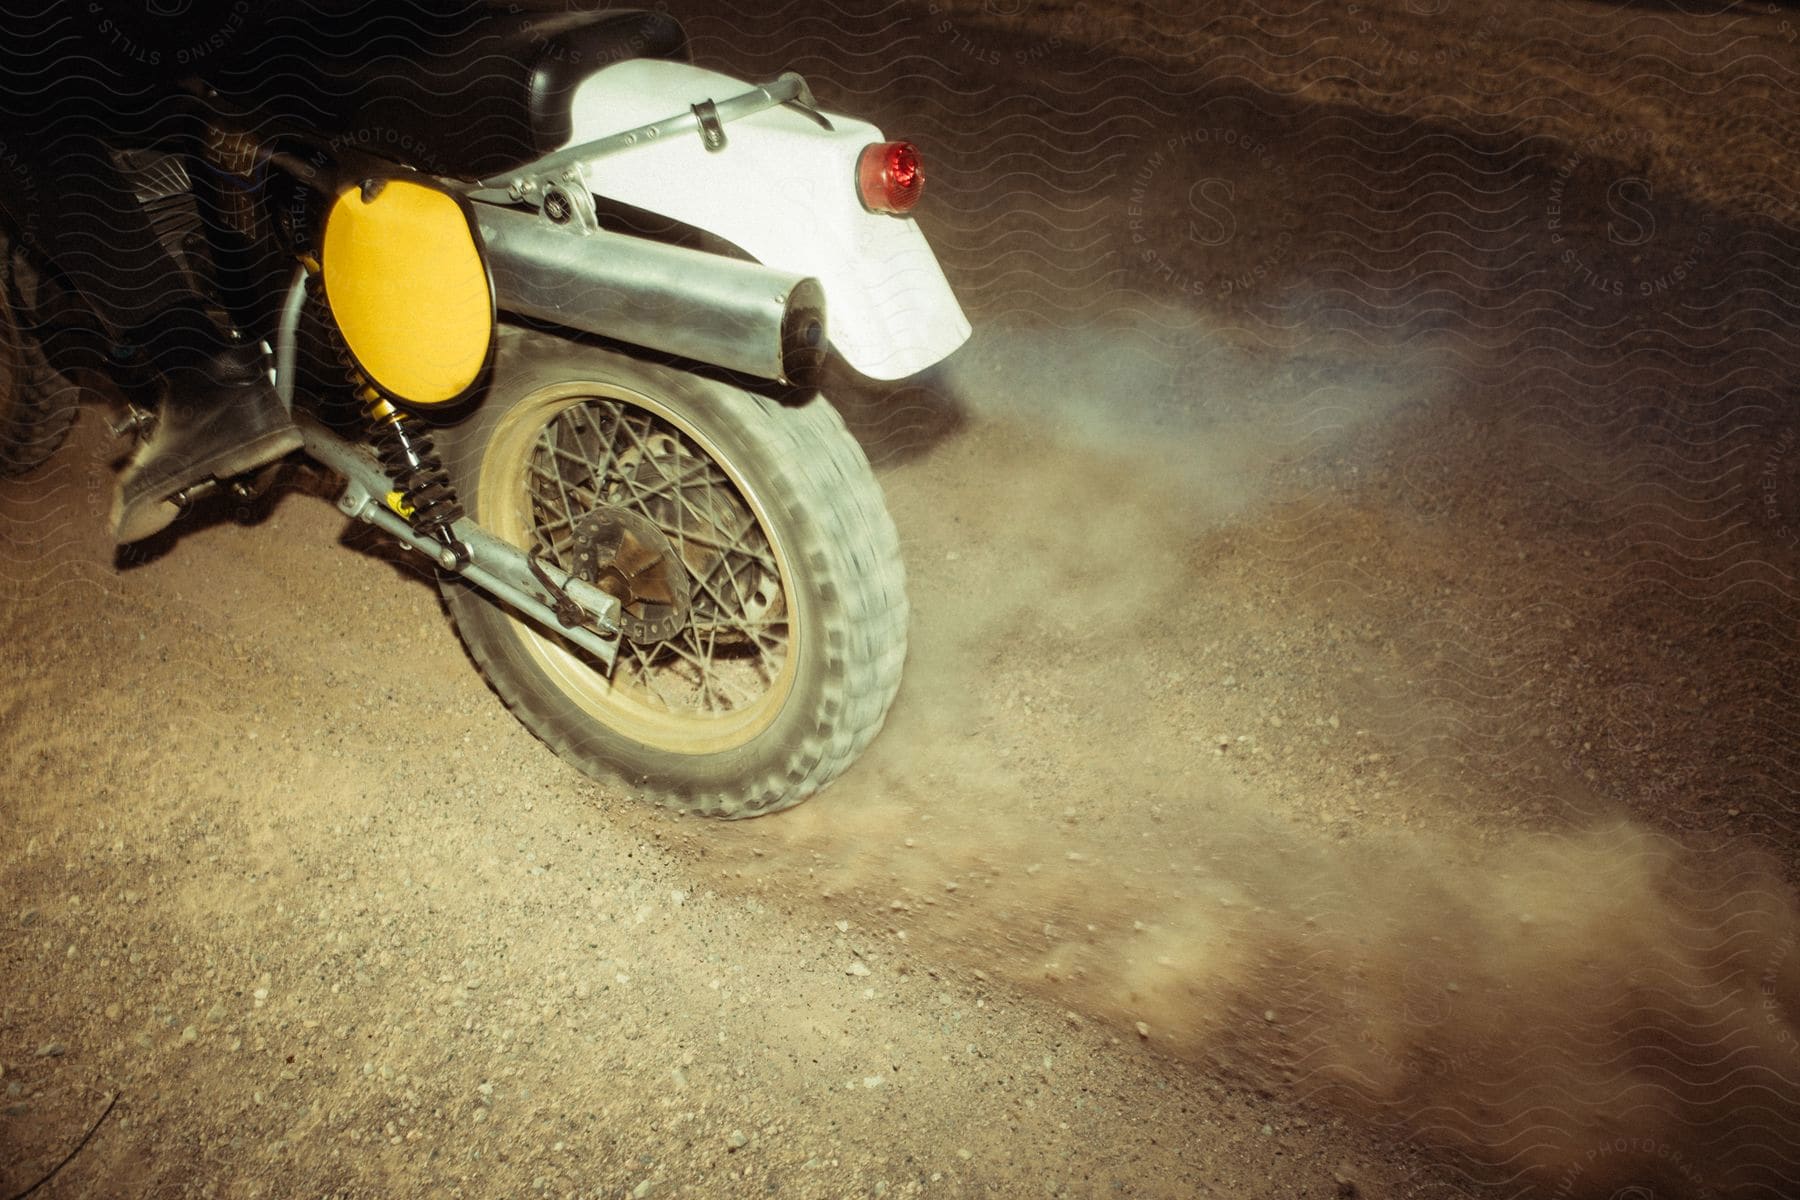 A dirt bike wheel kicking up gravel.